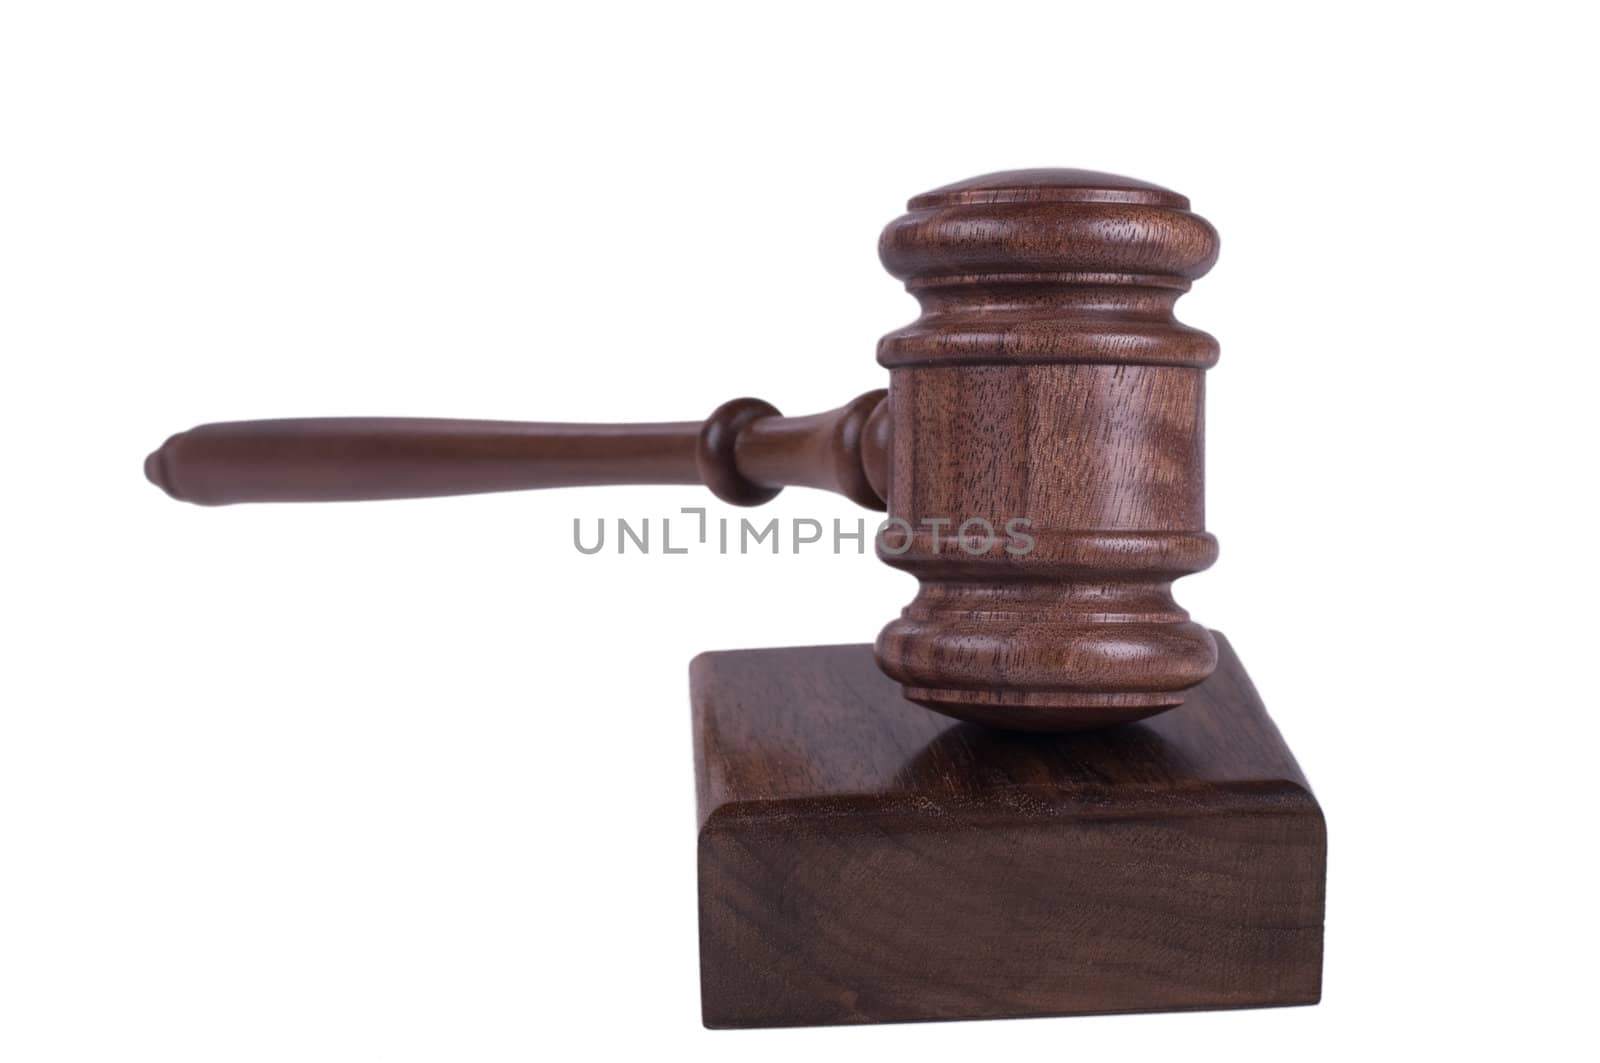 image of a judges gavel isolated on white background